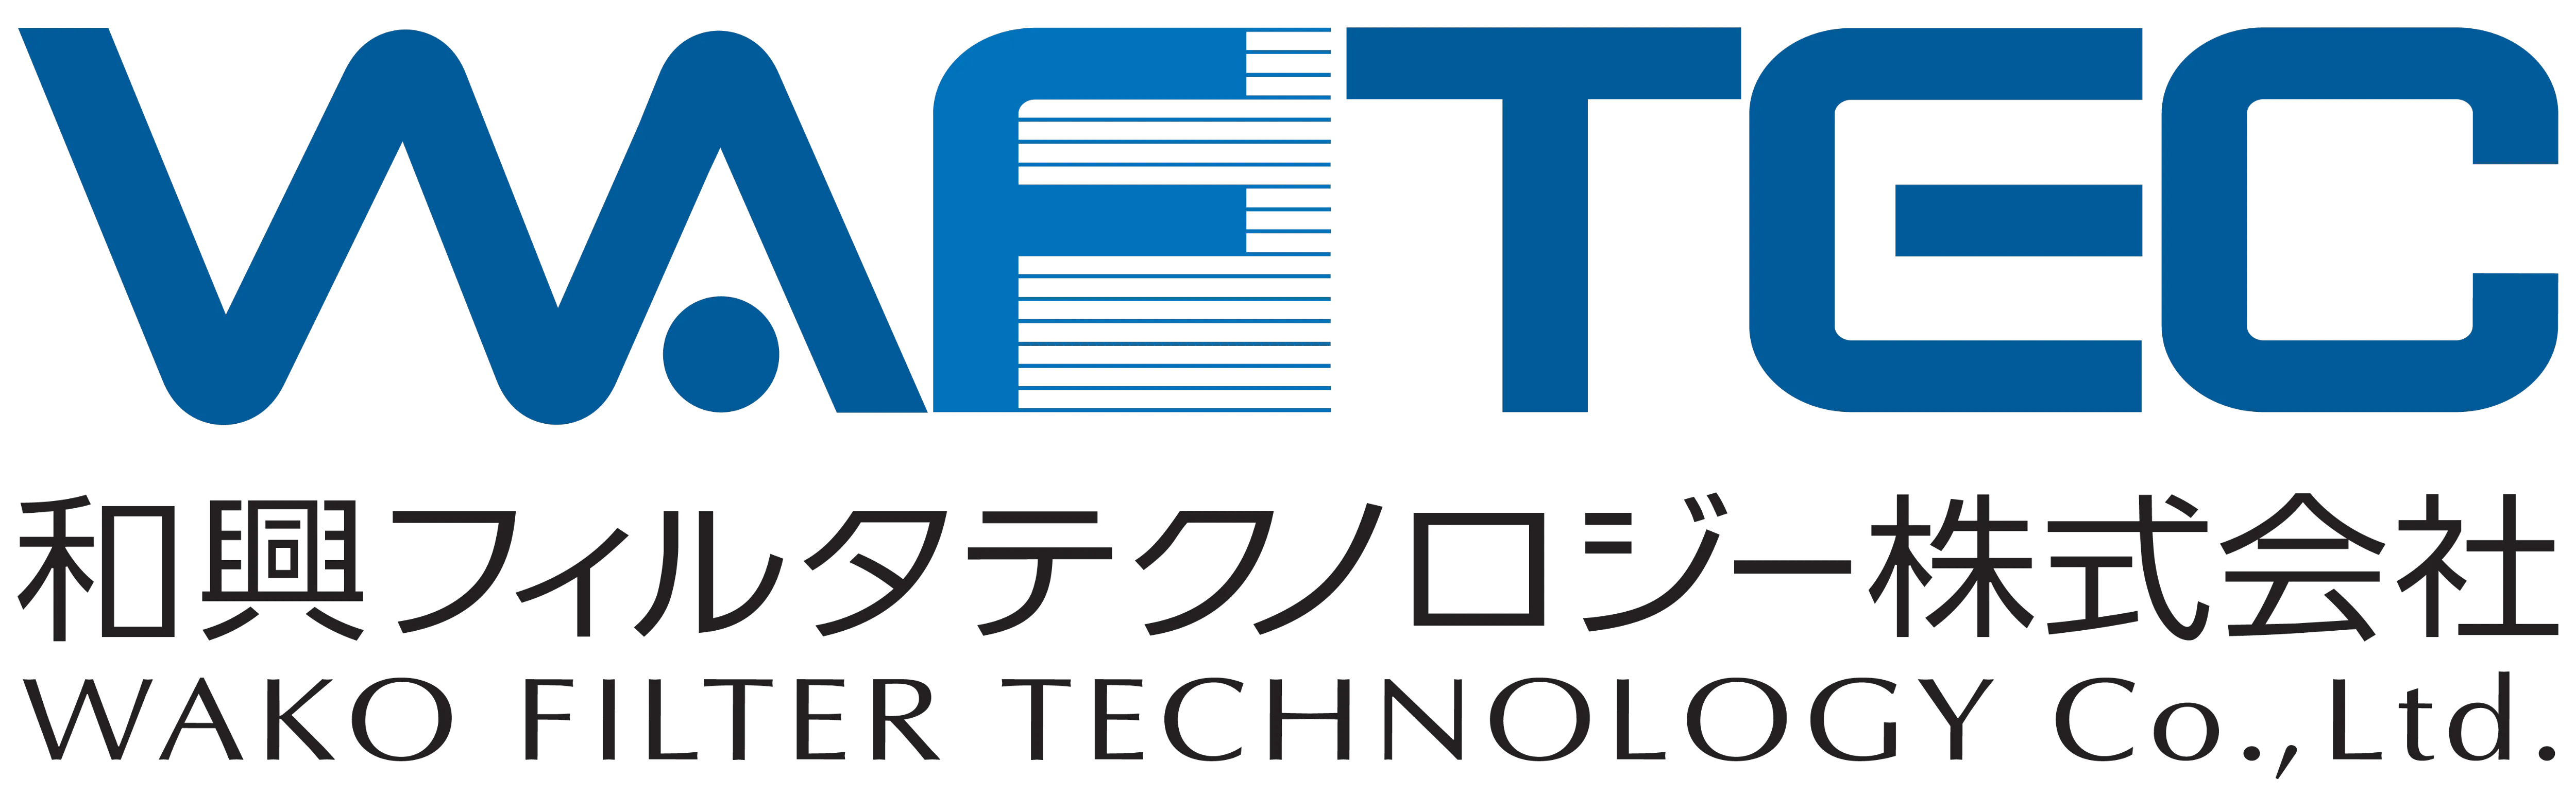 WAFTEC 和興フィルタテクノロジー株式会社 WAKO FILTER TECHNOLOGY Co,.Ltd.